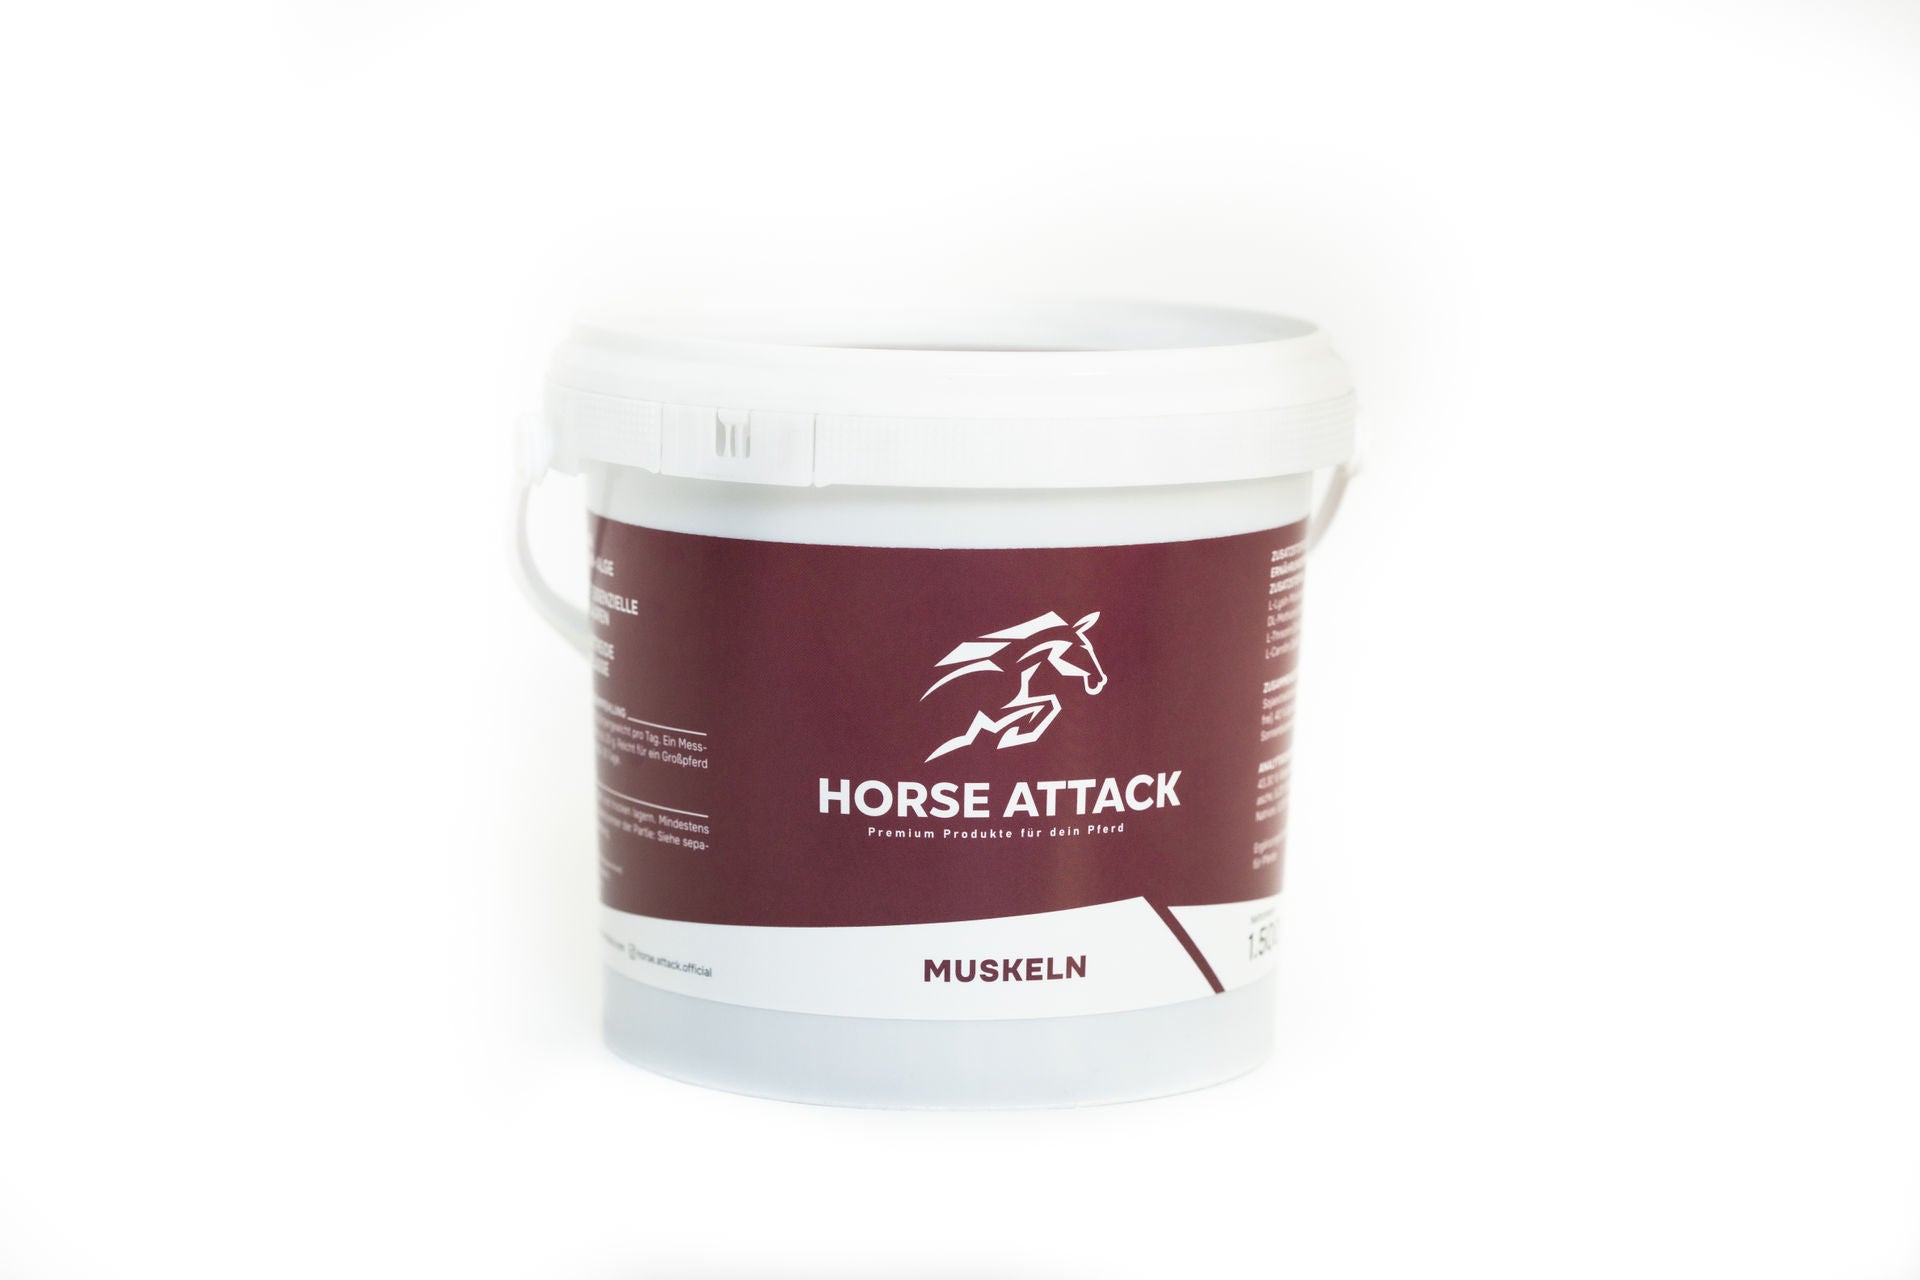 Horse-Attack Premium Muskeln 1.5 kg